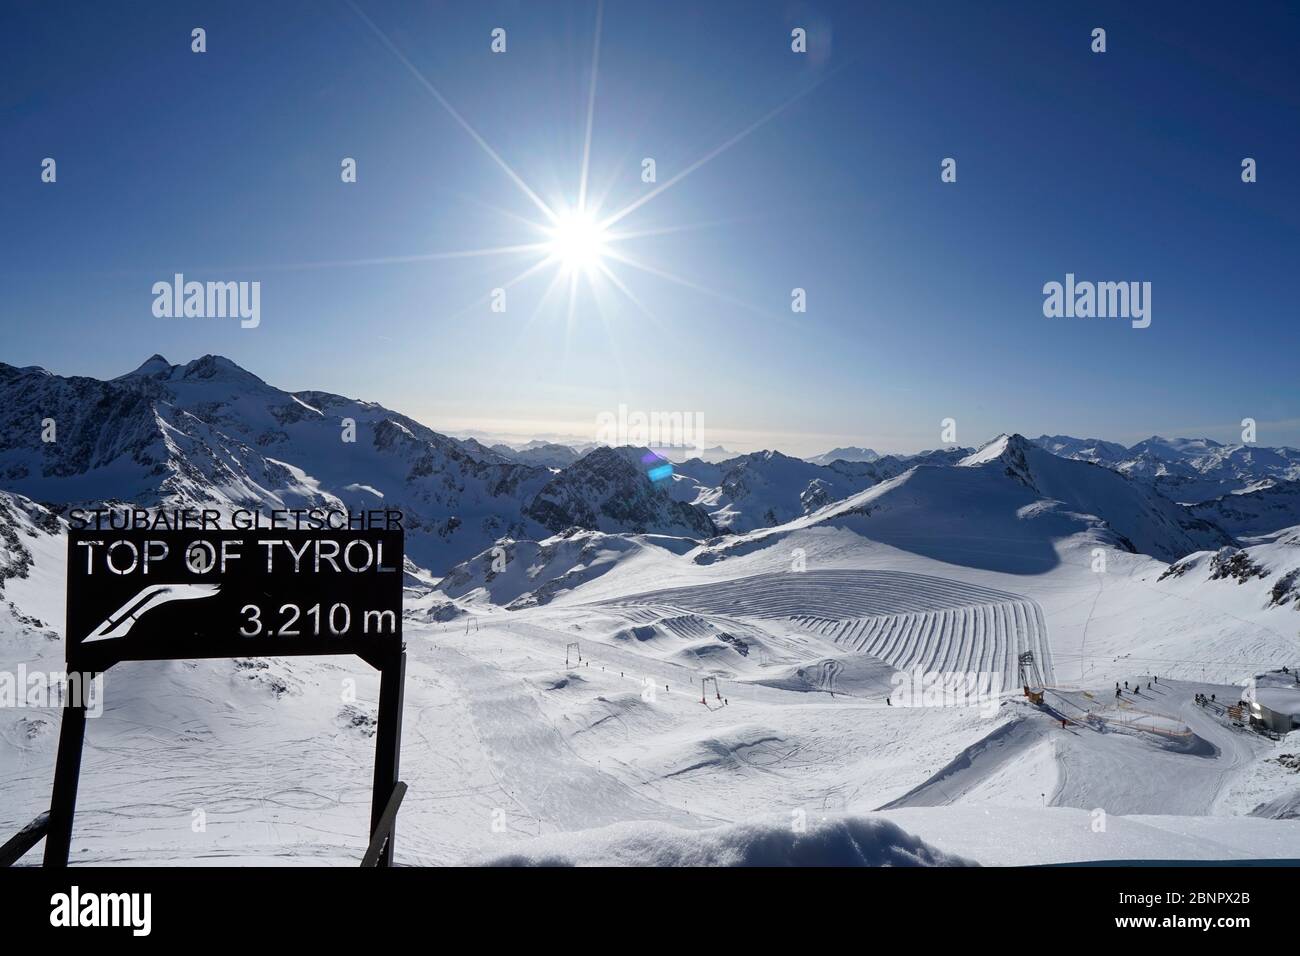 Austria, Tyrol, Stubaital, Stubai Glacier, viewing platform Top of Tyrol,  3210m, sign, ski slope Gaisskarferner, sun, back light Stock Photo - Alamy